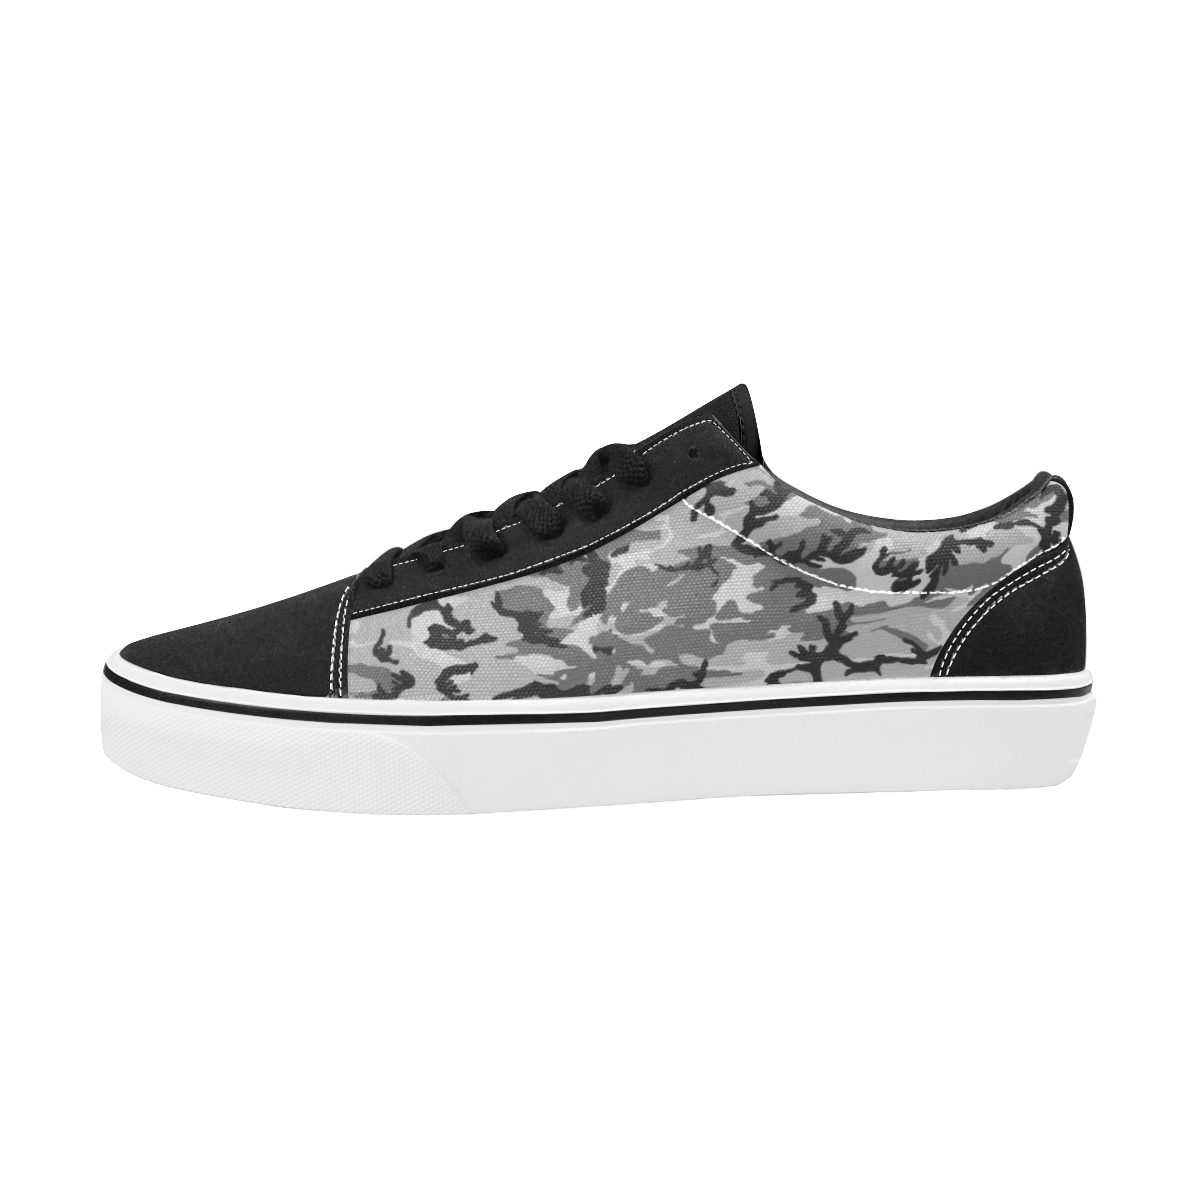 Woodland Urban City Black/Gray Camouflage Women's Low Top Skateboarding Shoes (Model E001-2)